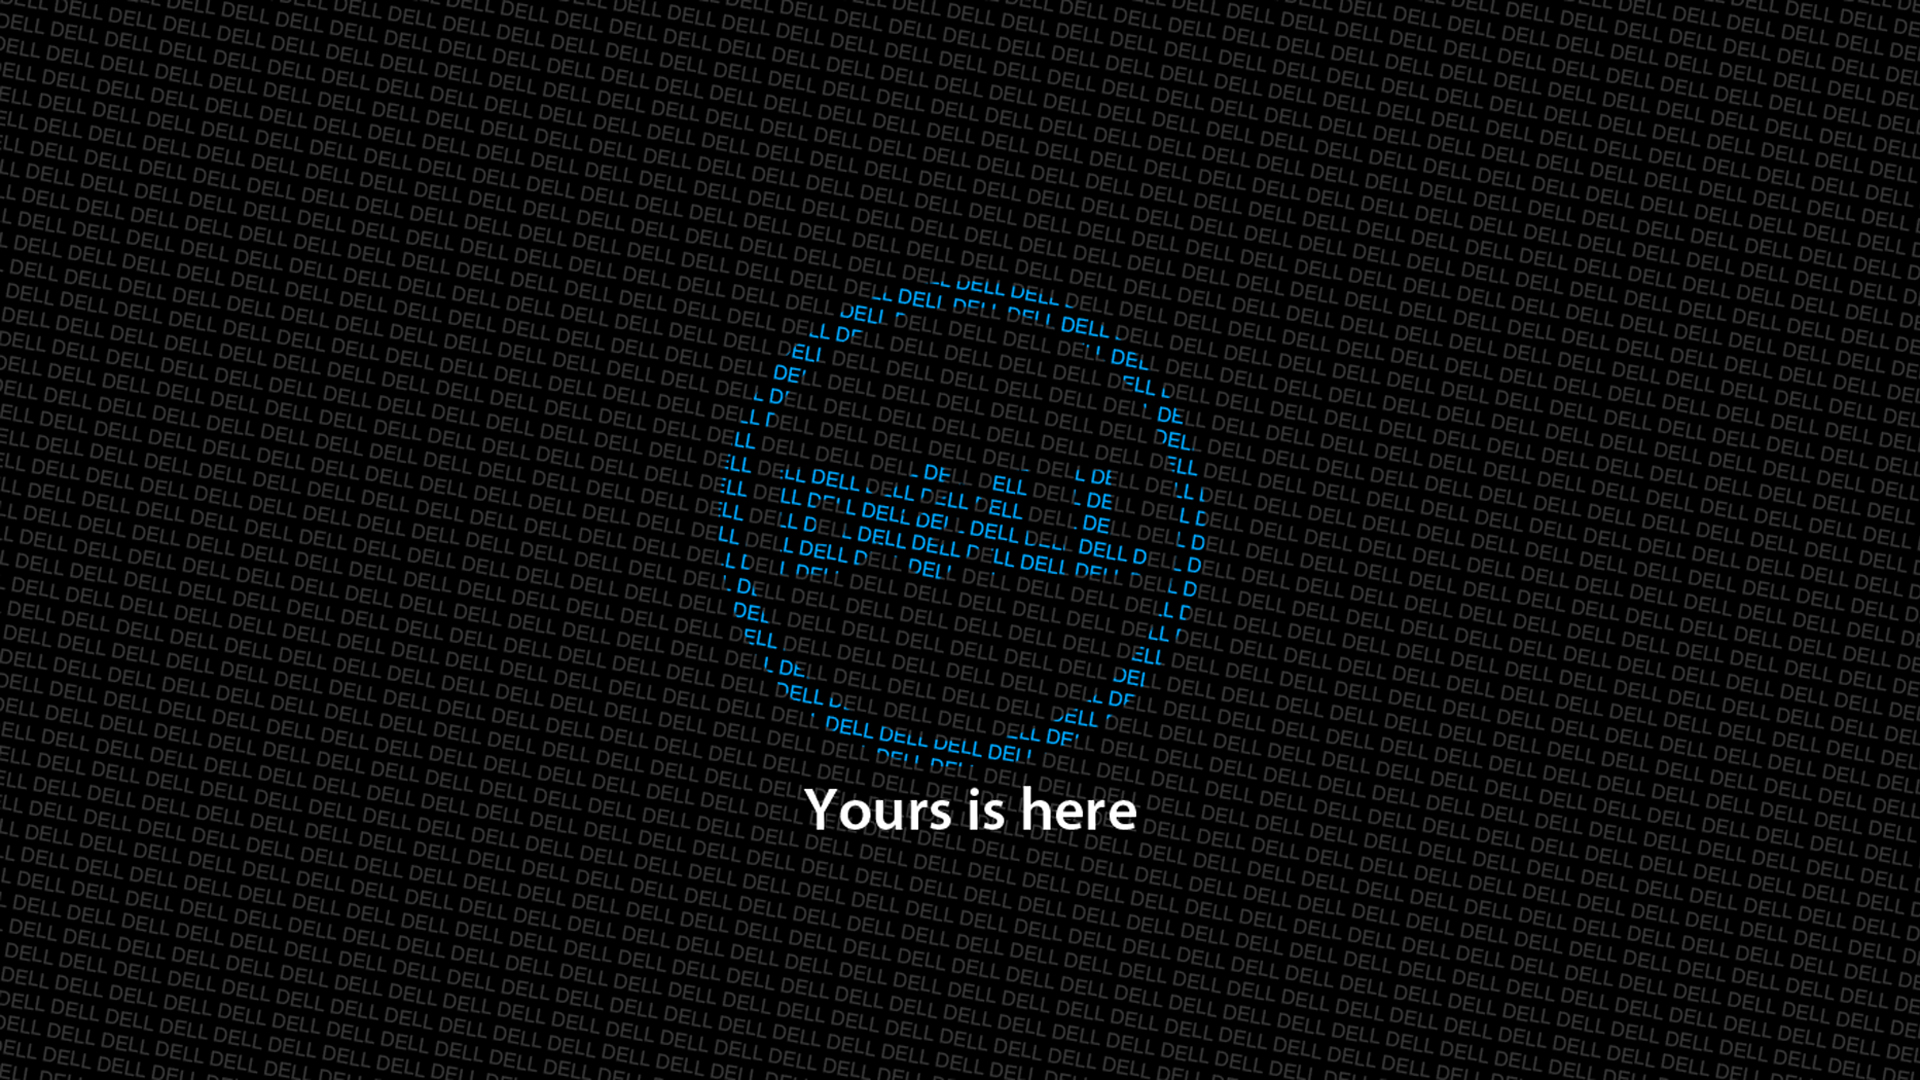 Dell Wallpaper Image Windows Background